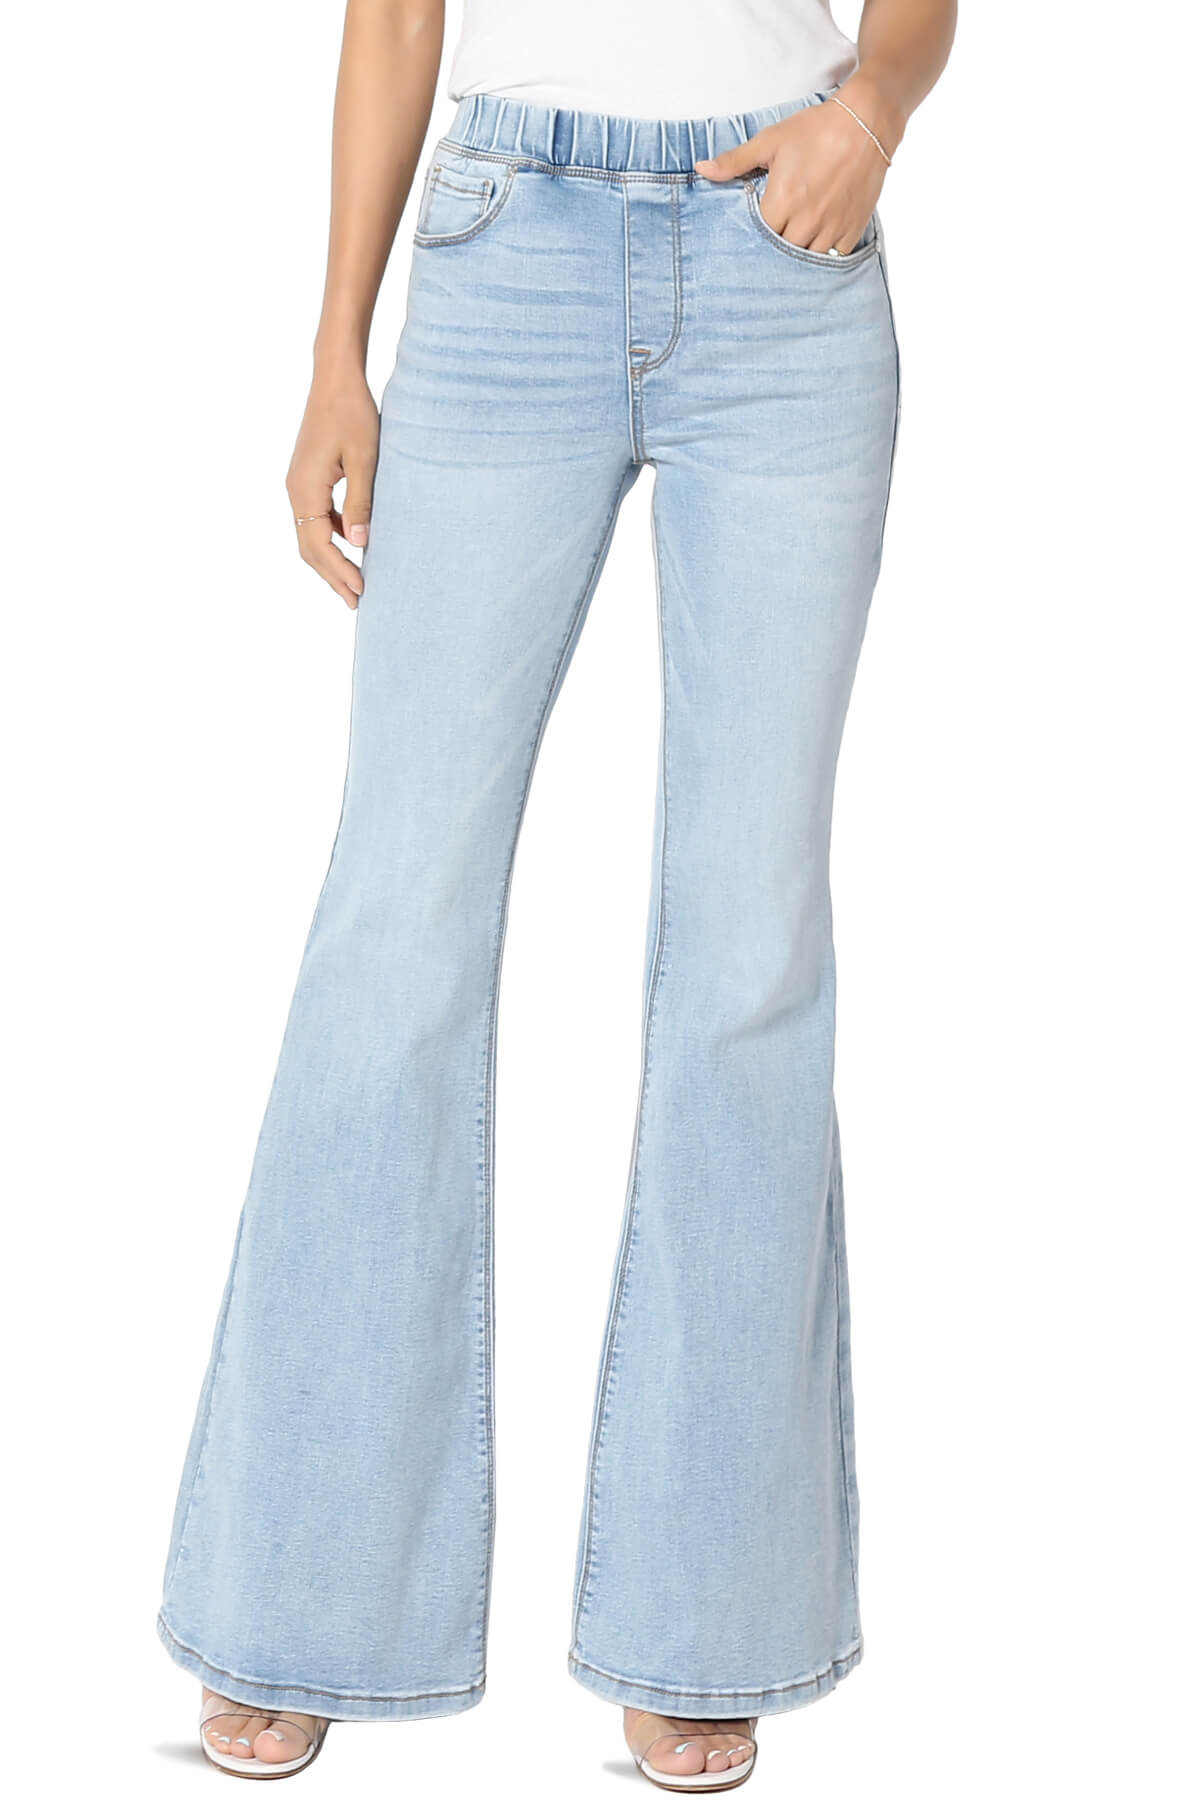 TheMogan Women's Elastic Waist High Rise Stretch Denim Long Flare Leg Jeans - image 1 of 7